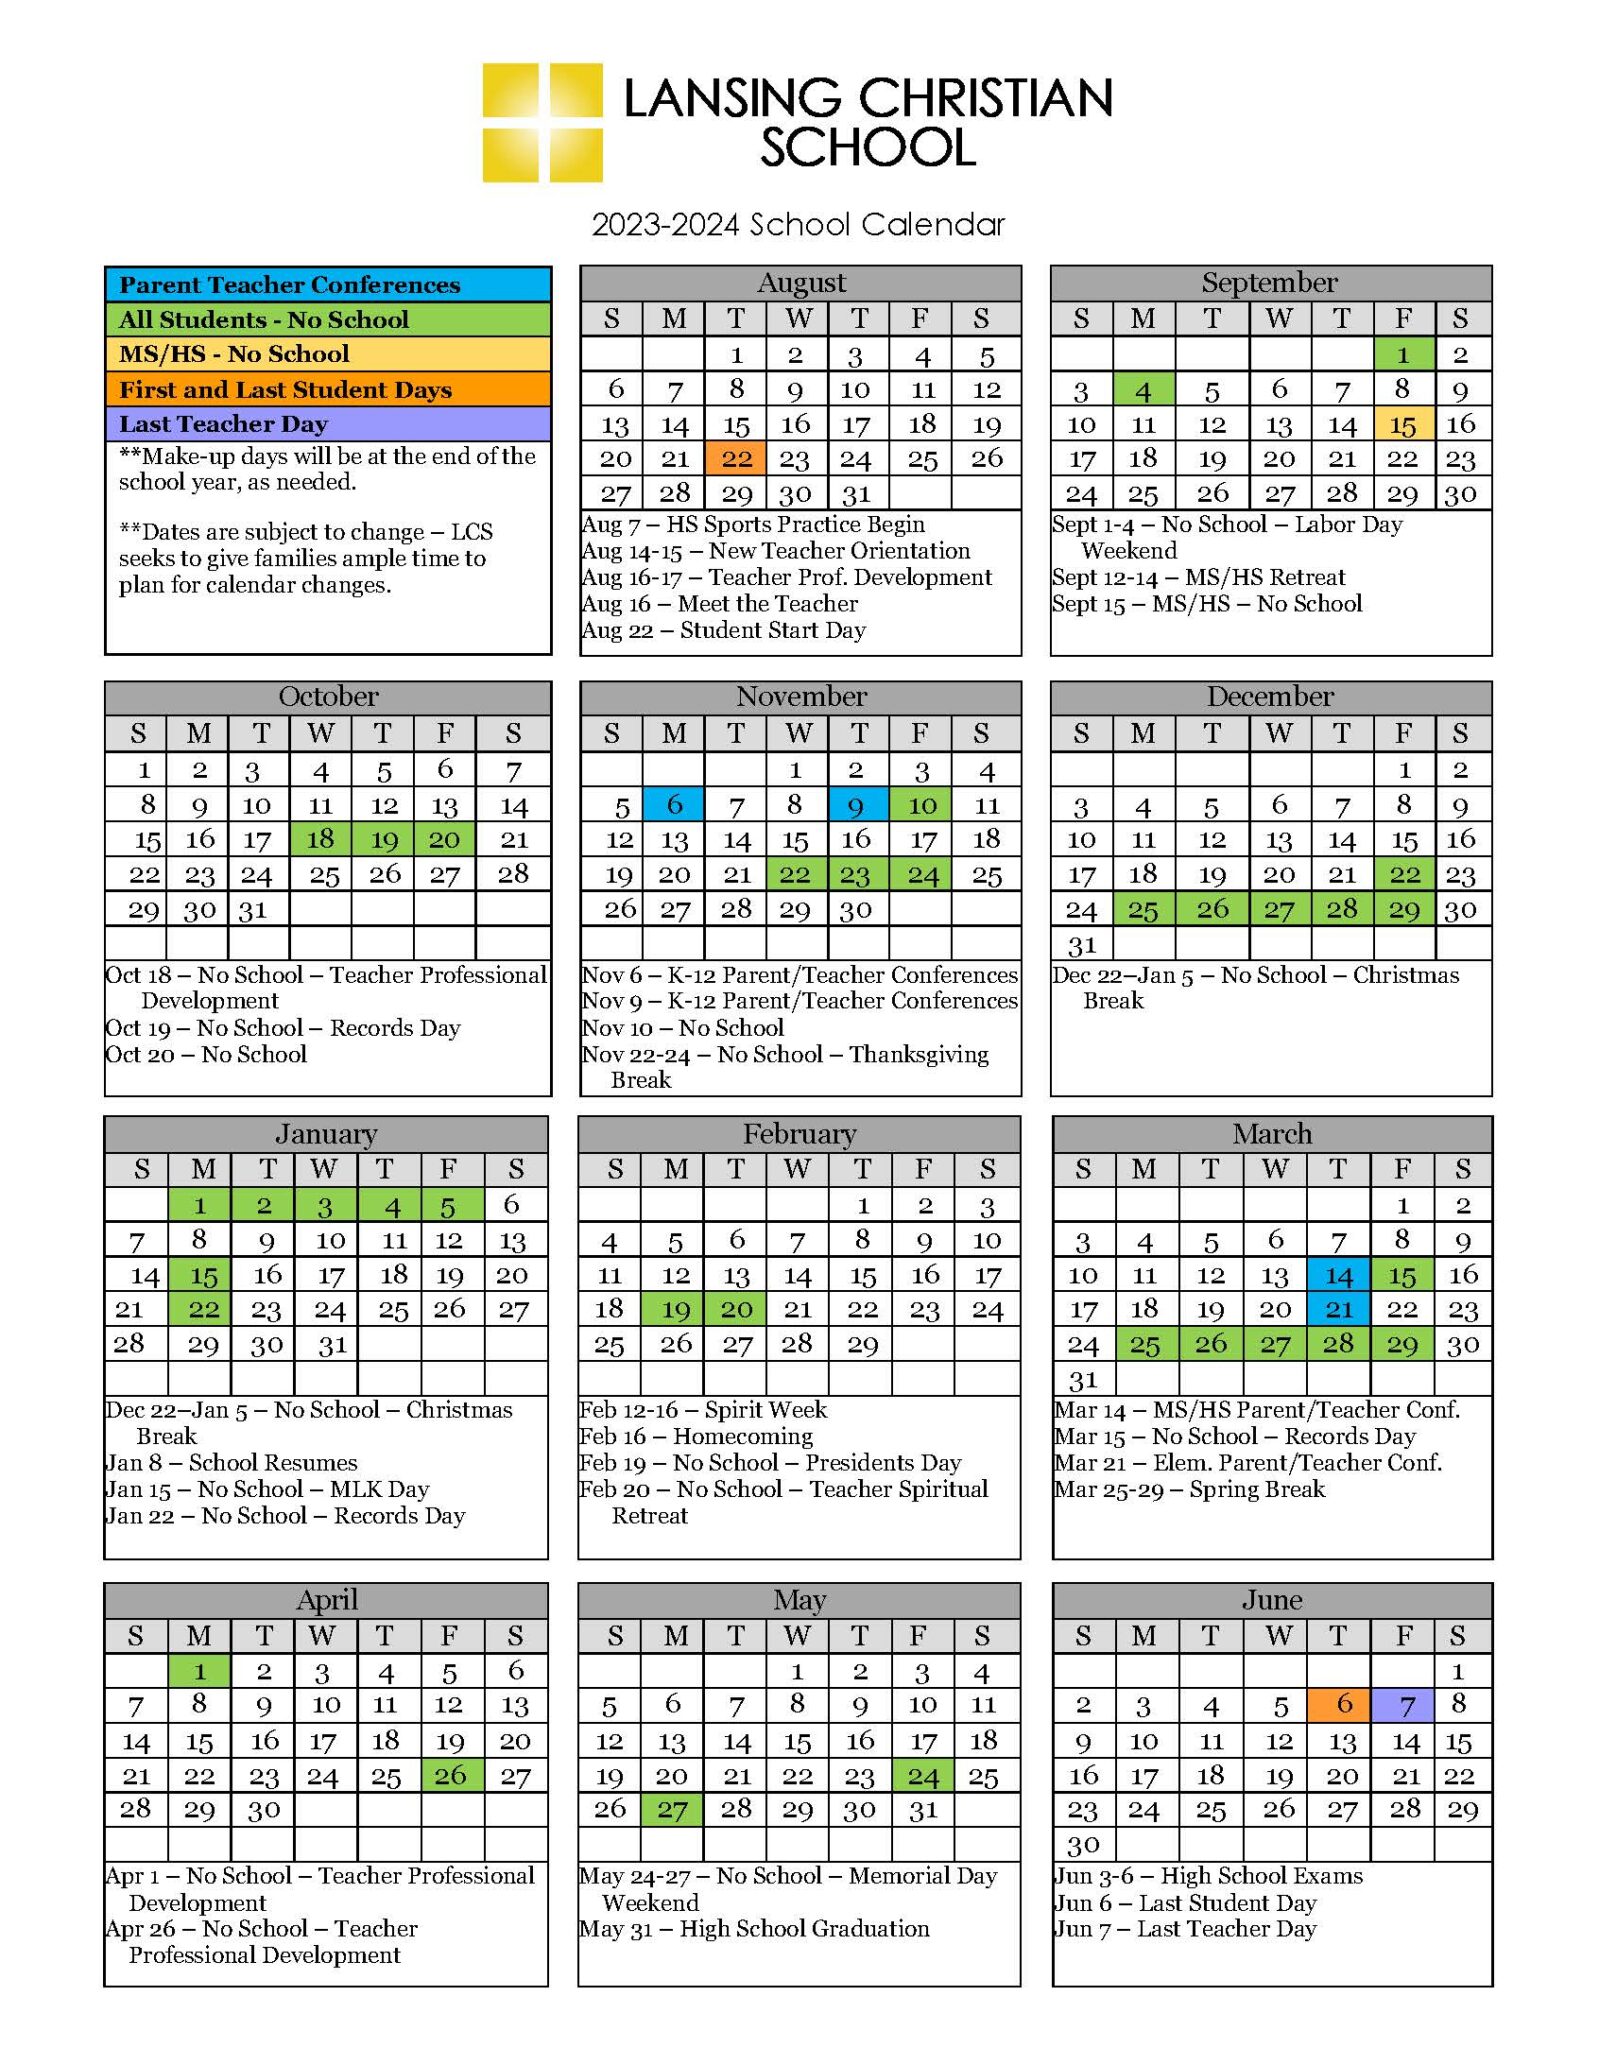 2023-24-one-page-calendar-lansing-christian-school